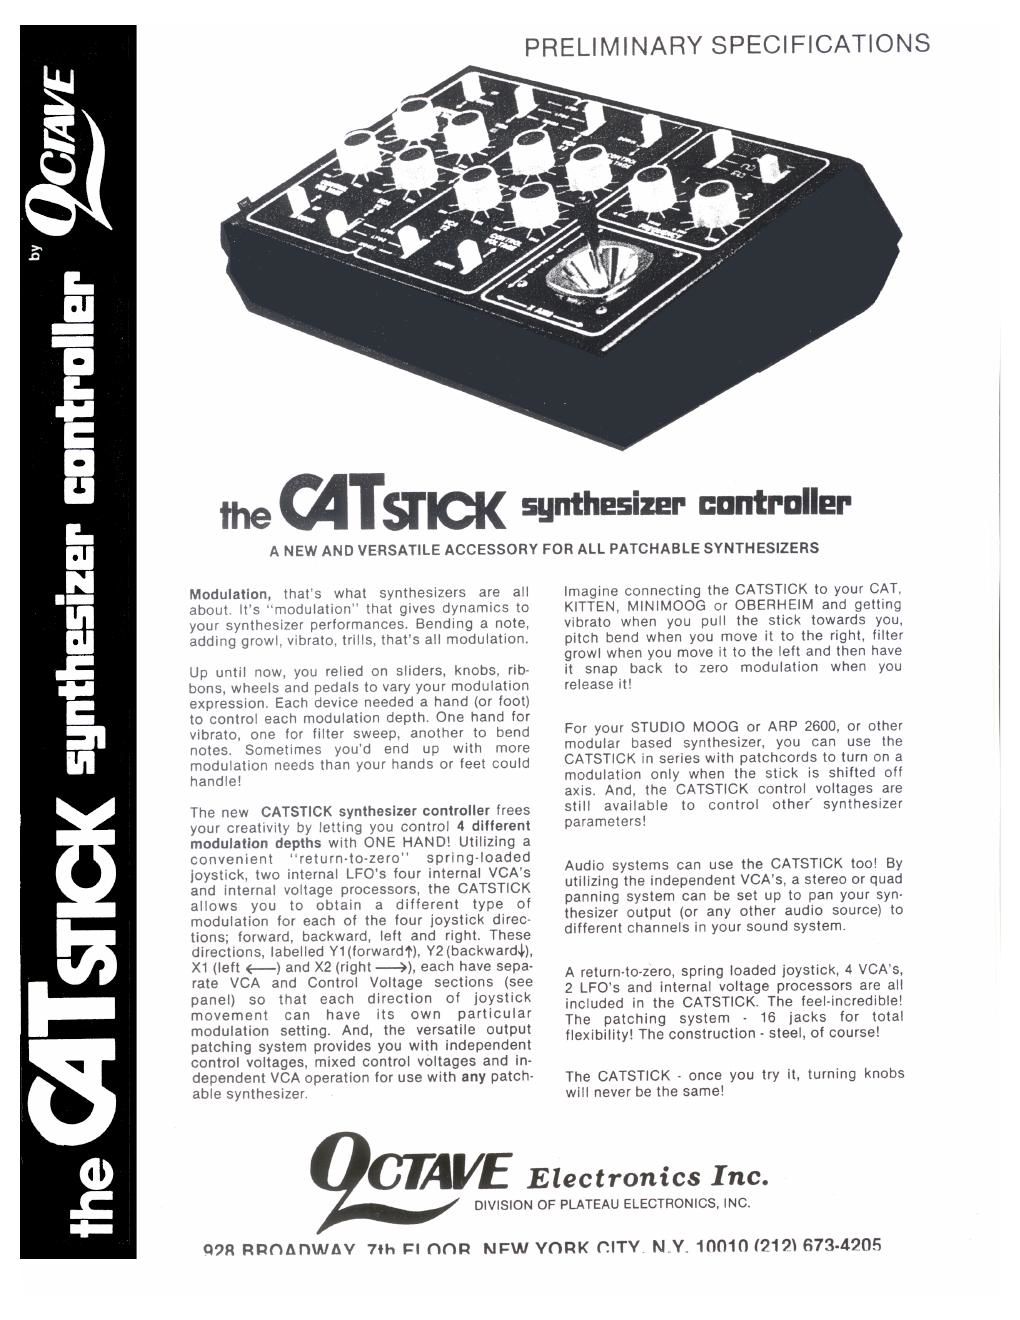 octave catstick